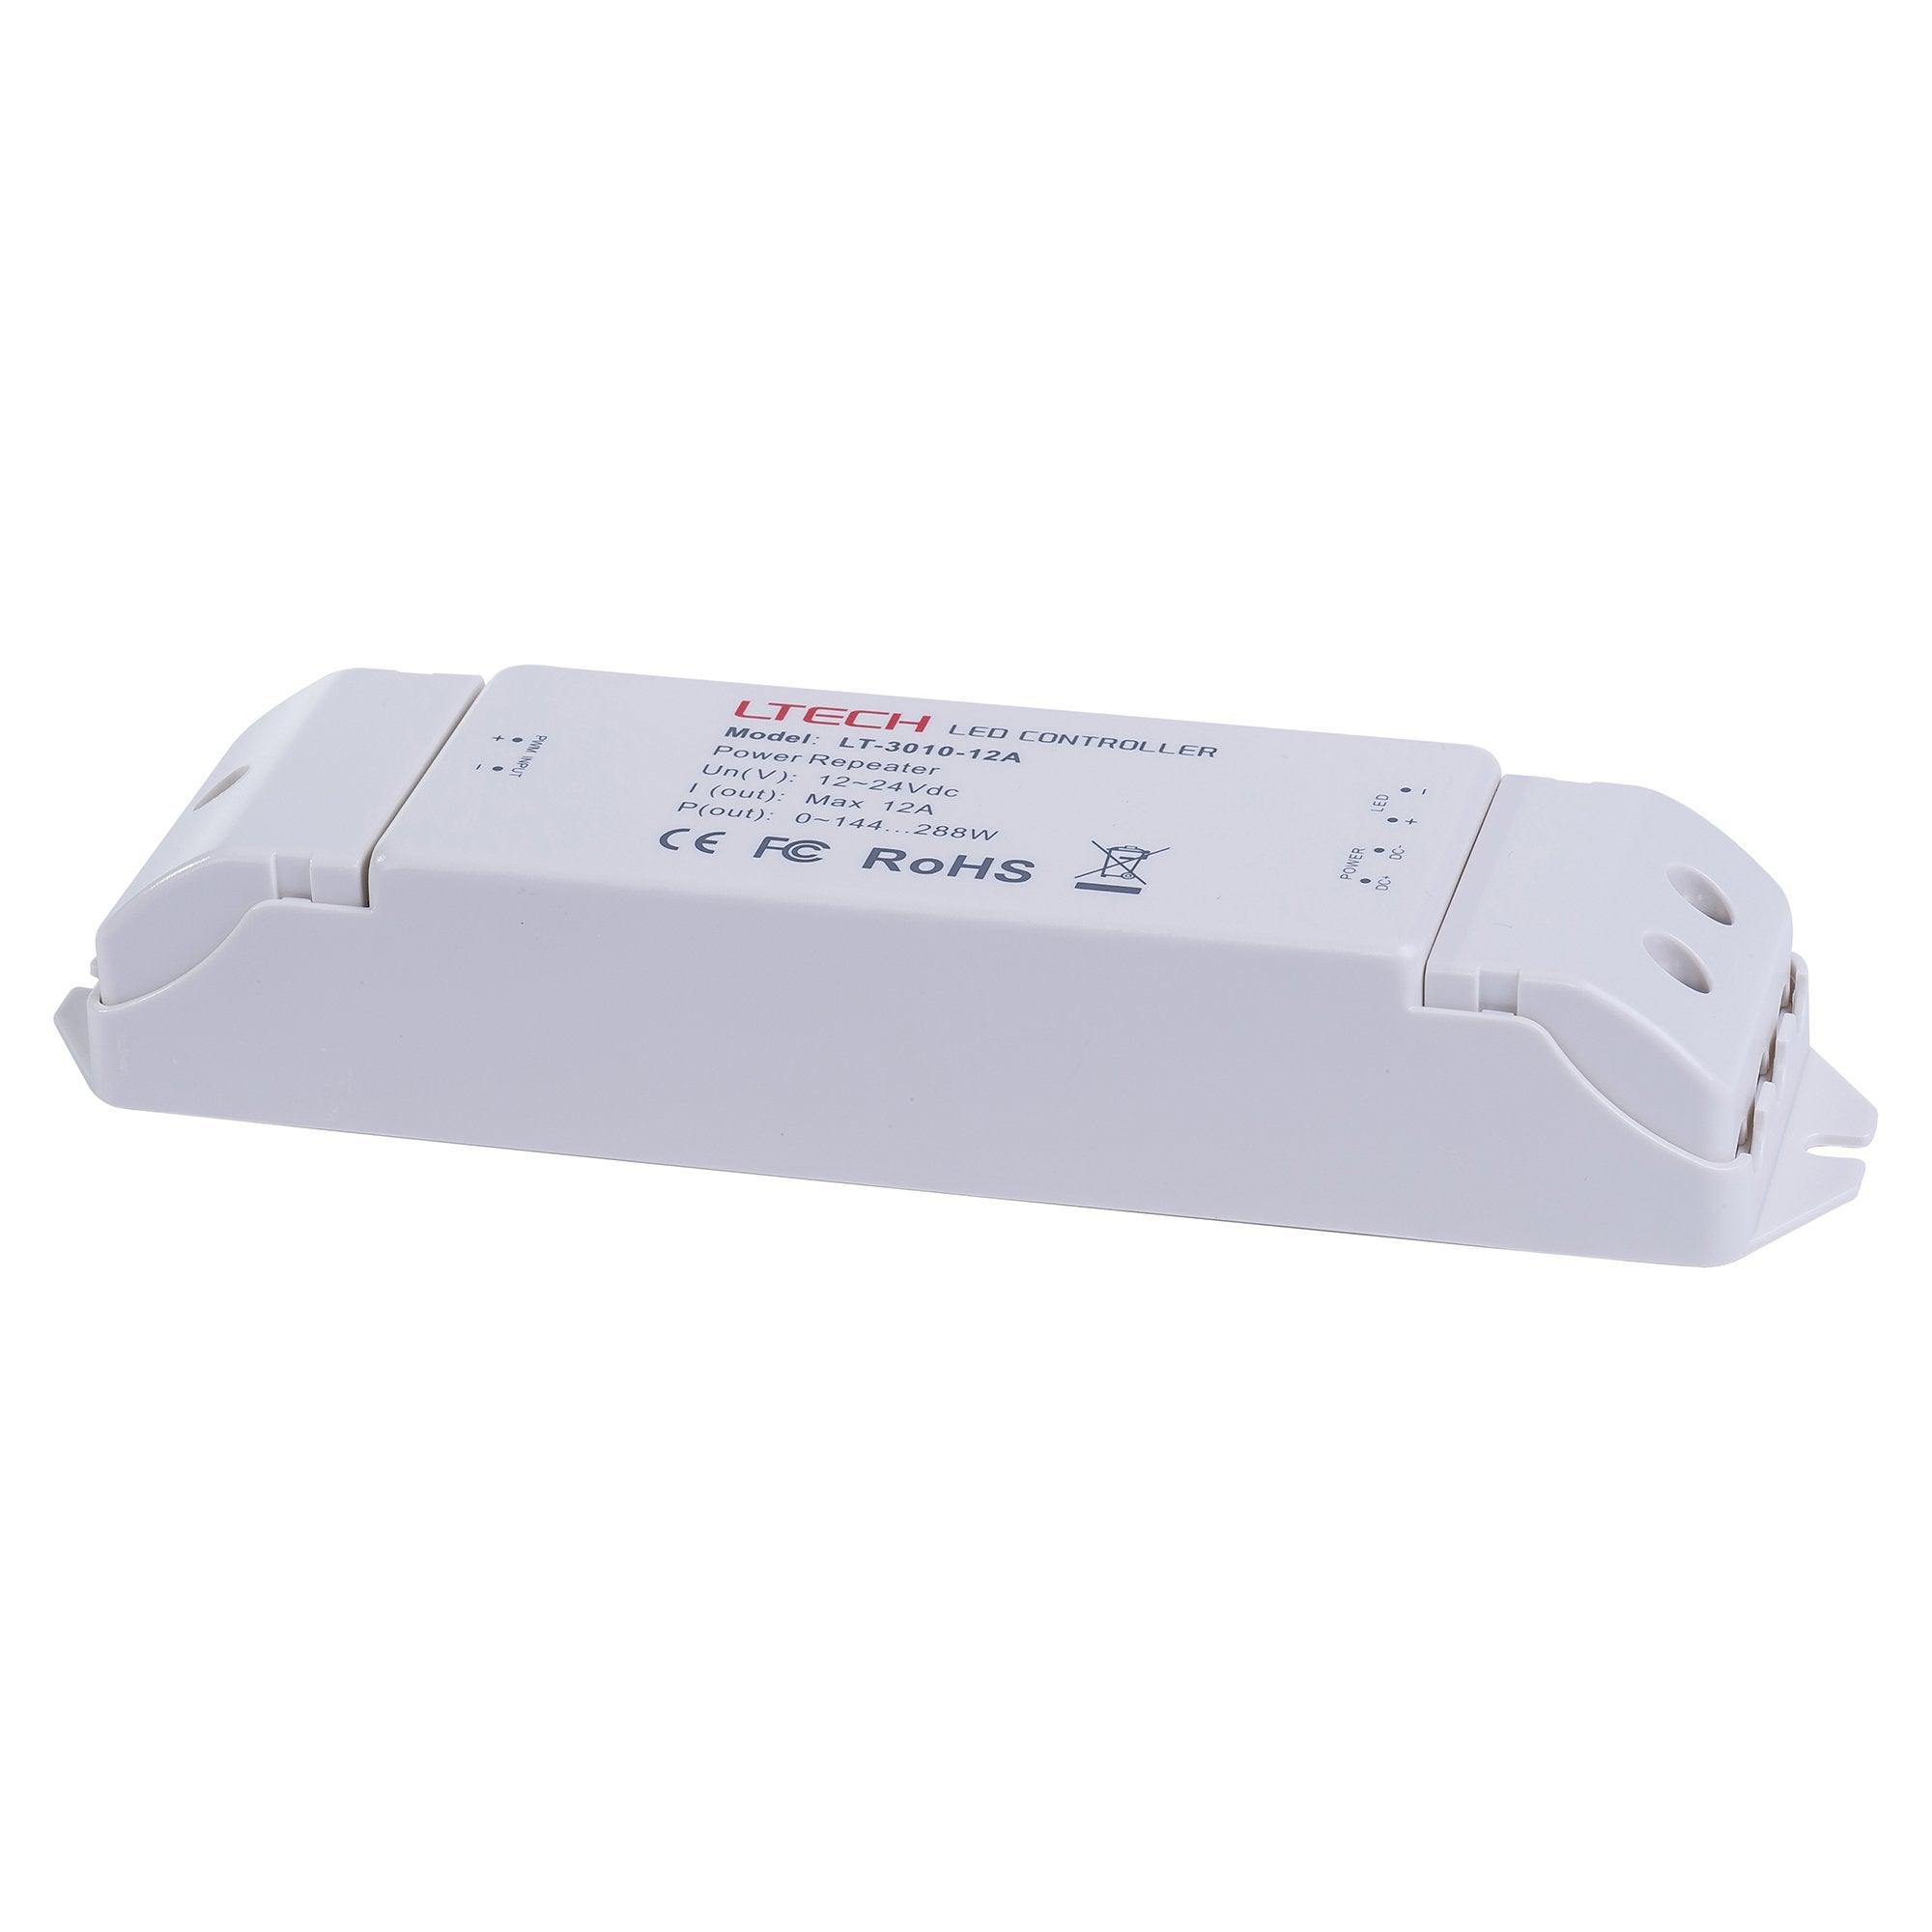 Havit Lighting LED Strip Controllers White Single Channel LED Strip Repeater - HV9104-LT-3010-12A Lights-For-You HV9104-LT-3010-12A